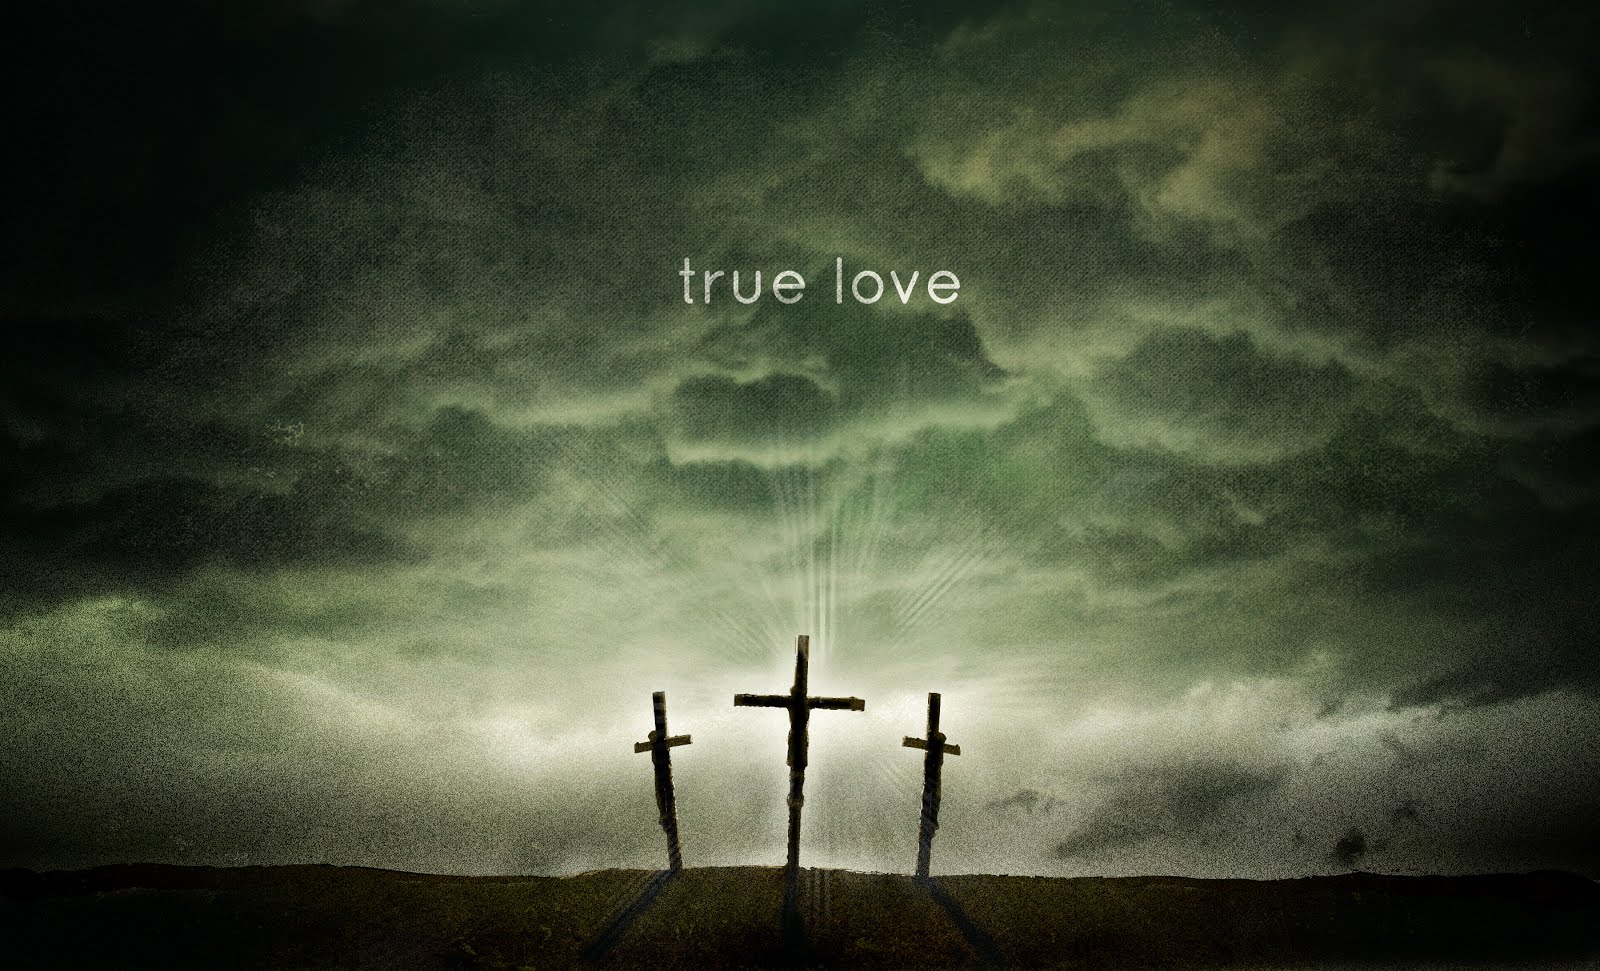 True Love? – Some musings